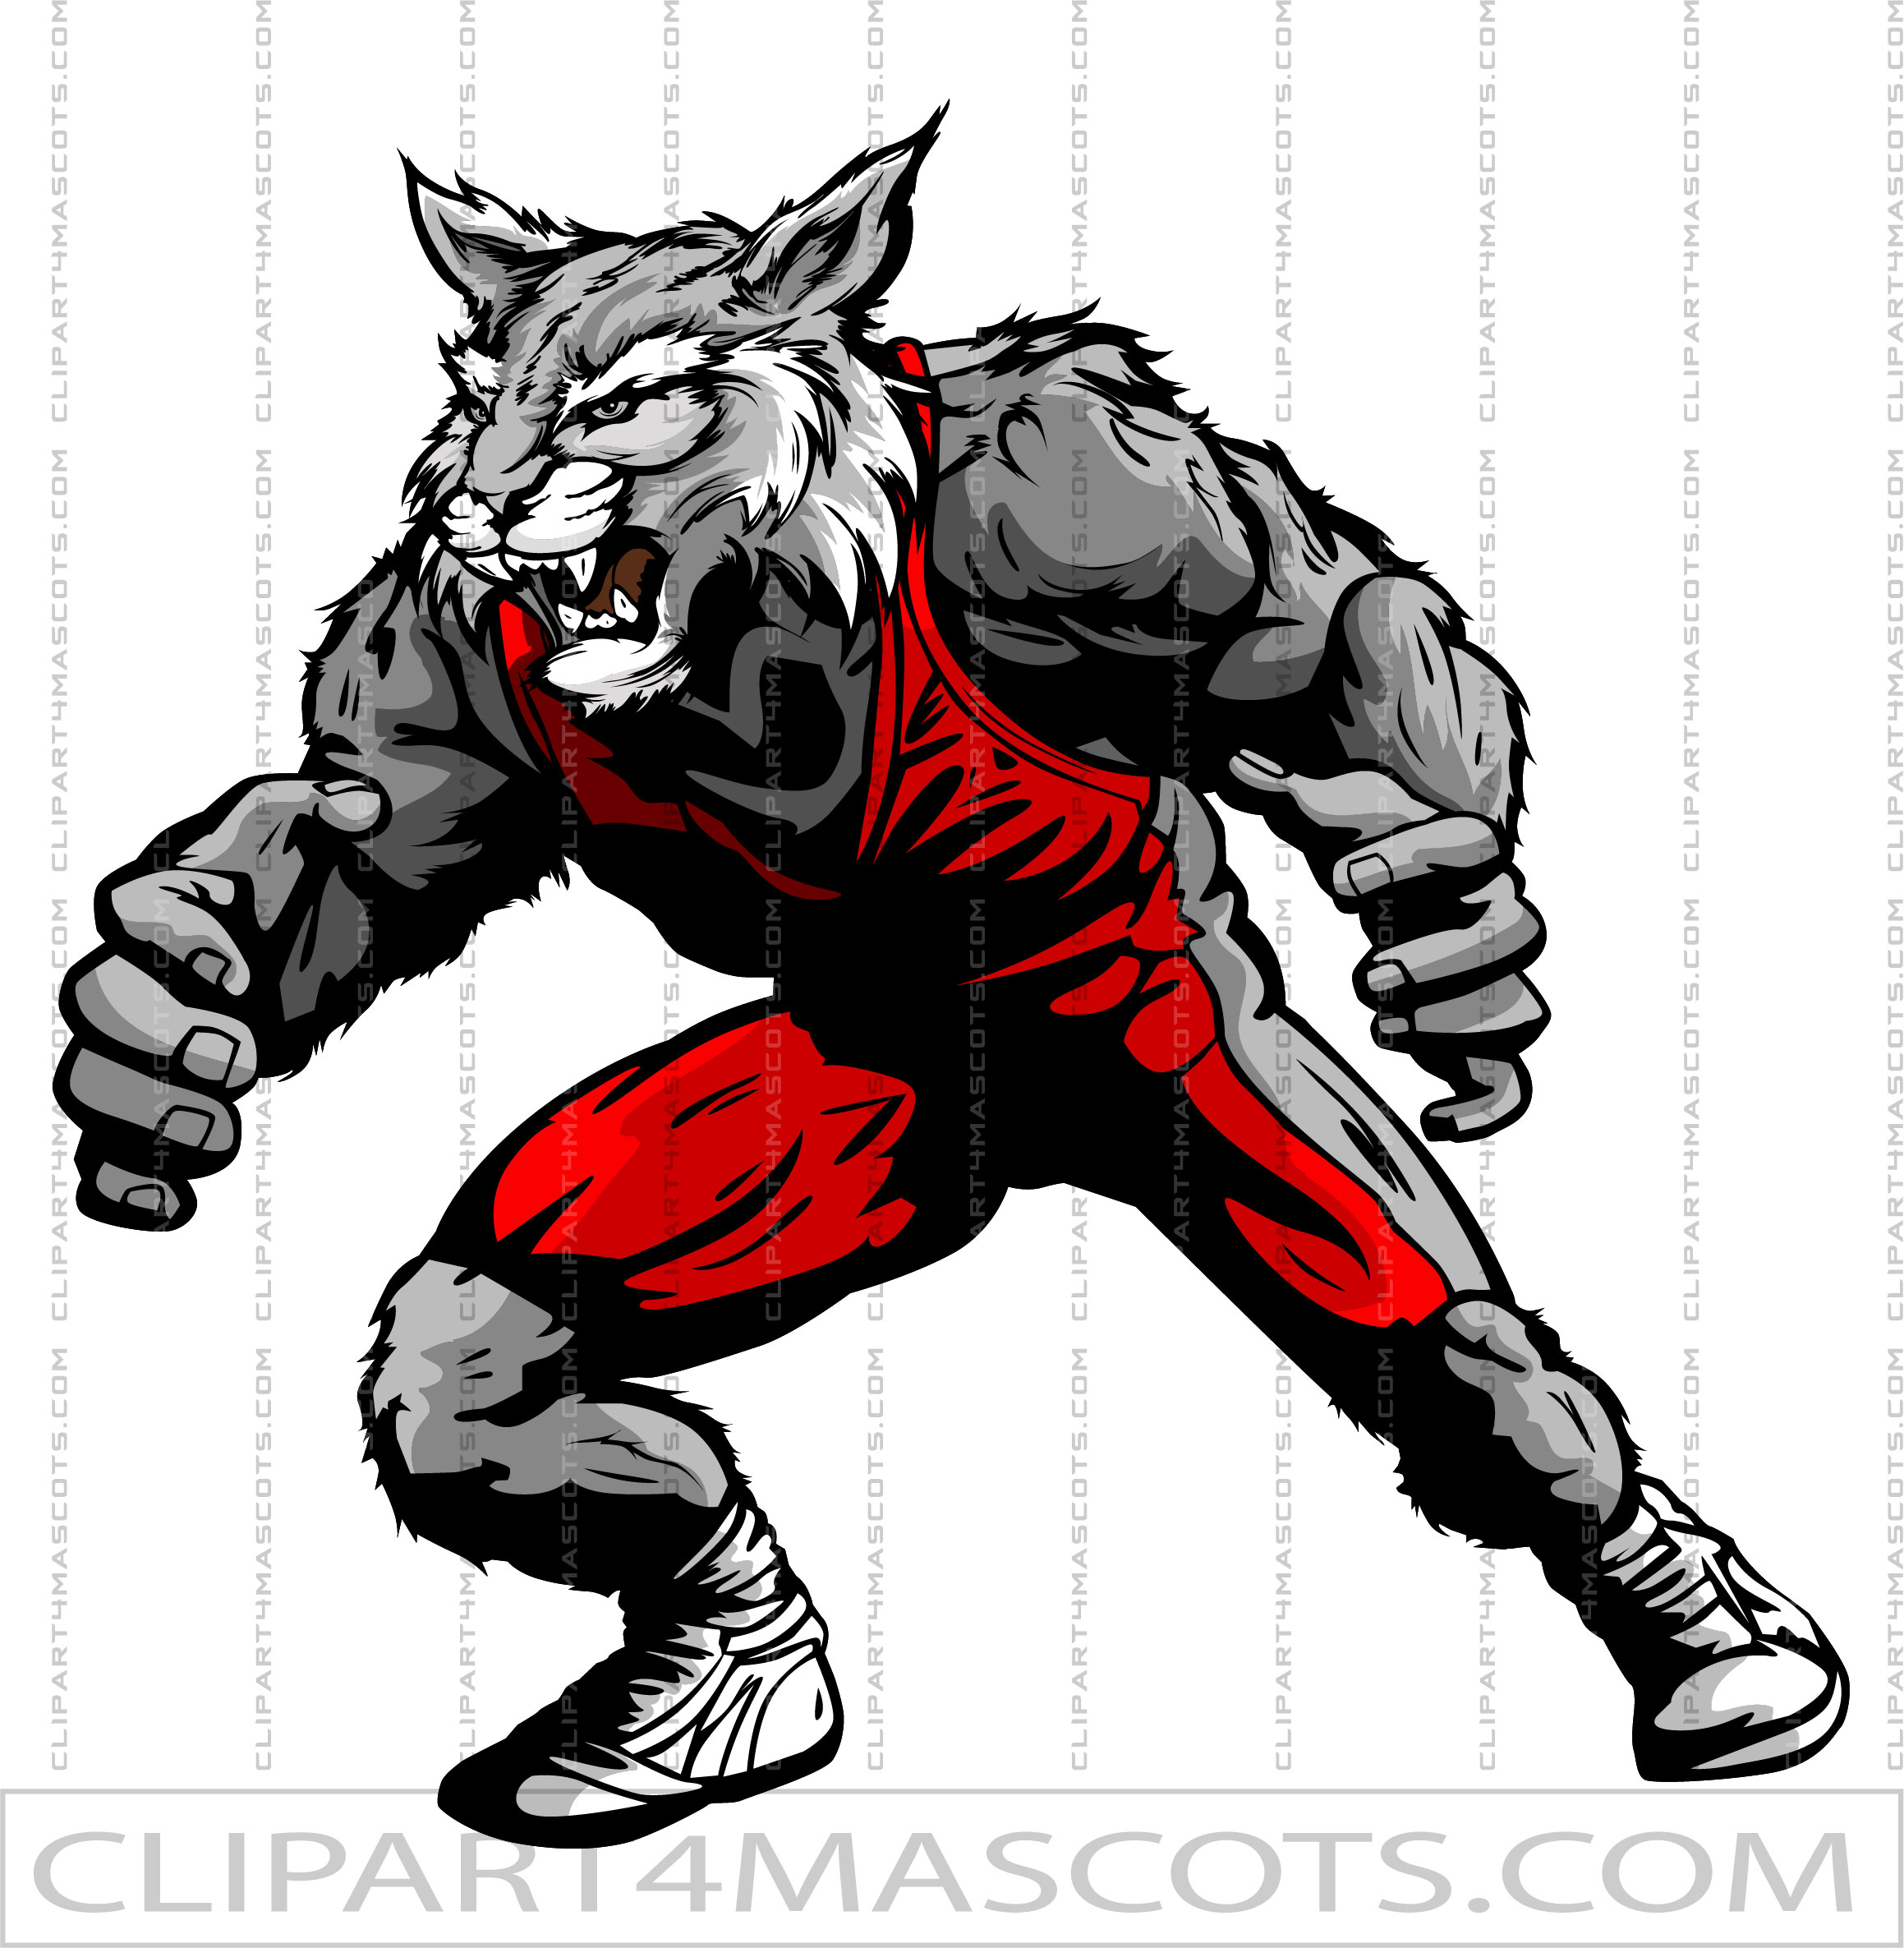 Wildcat Wresting Mascot